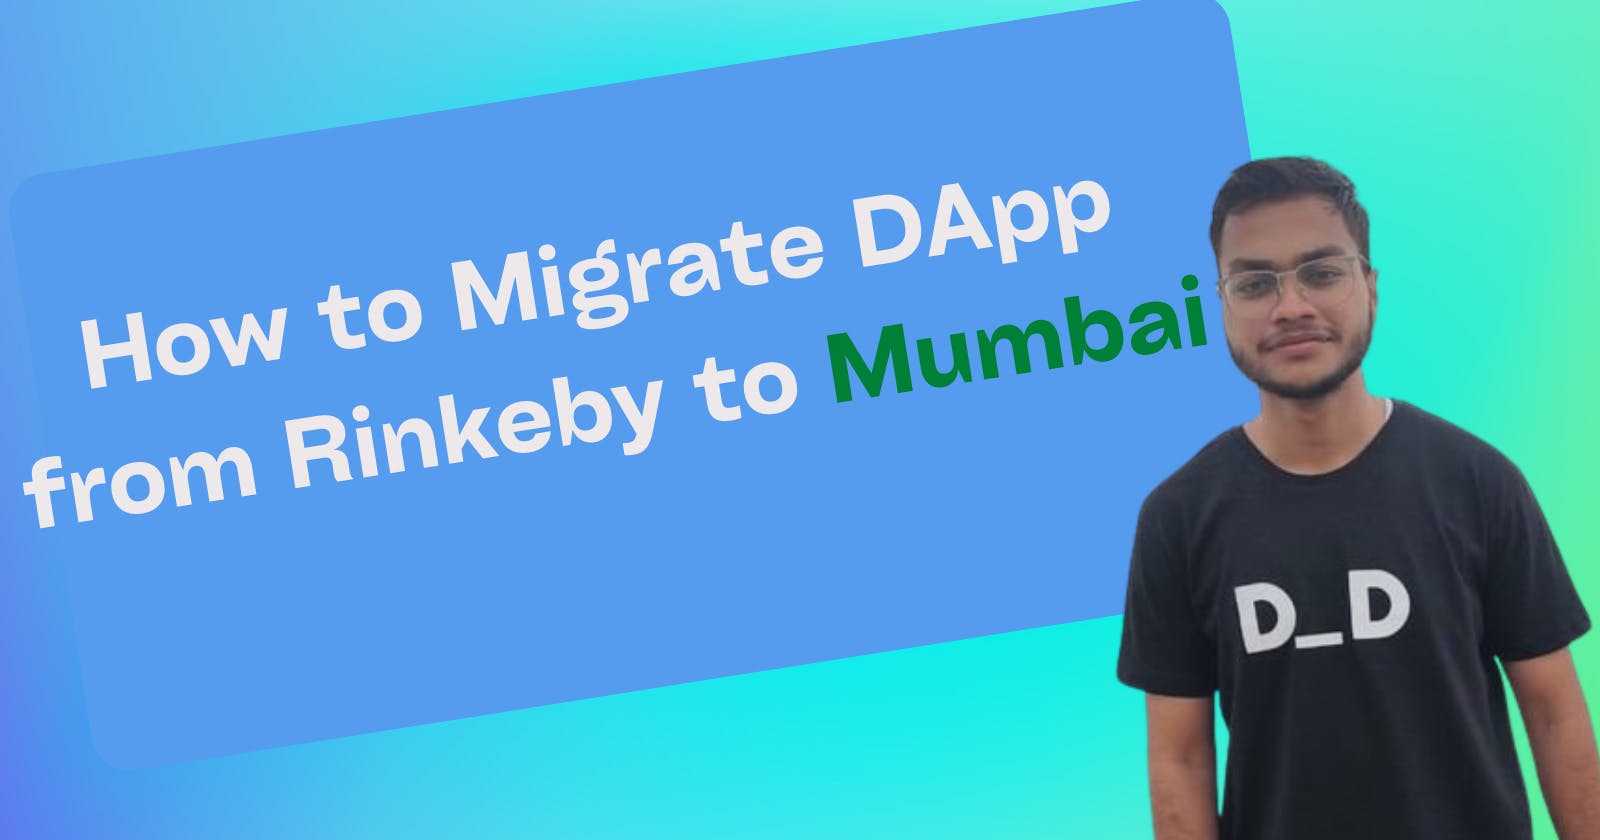 How To Migrate Dapp from Rinkeby to Mumbai